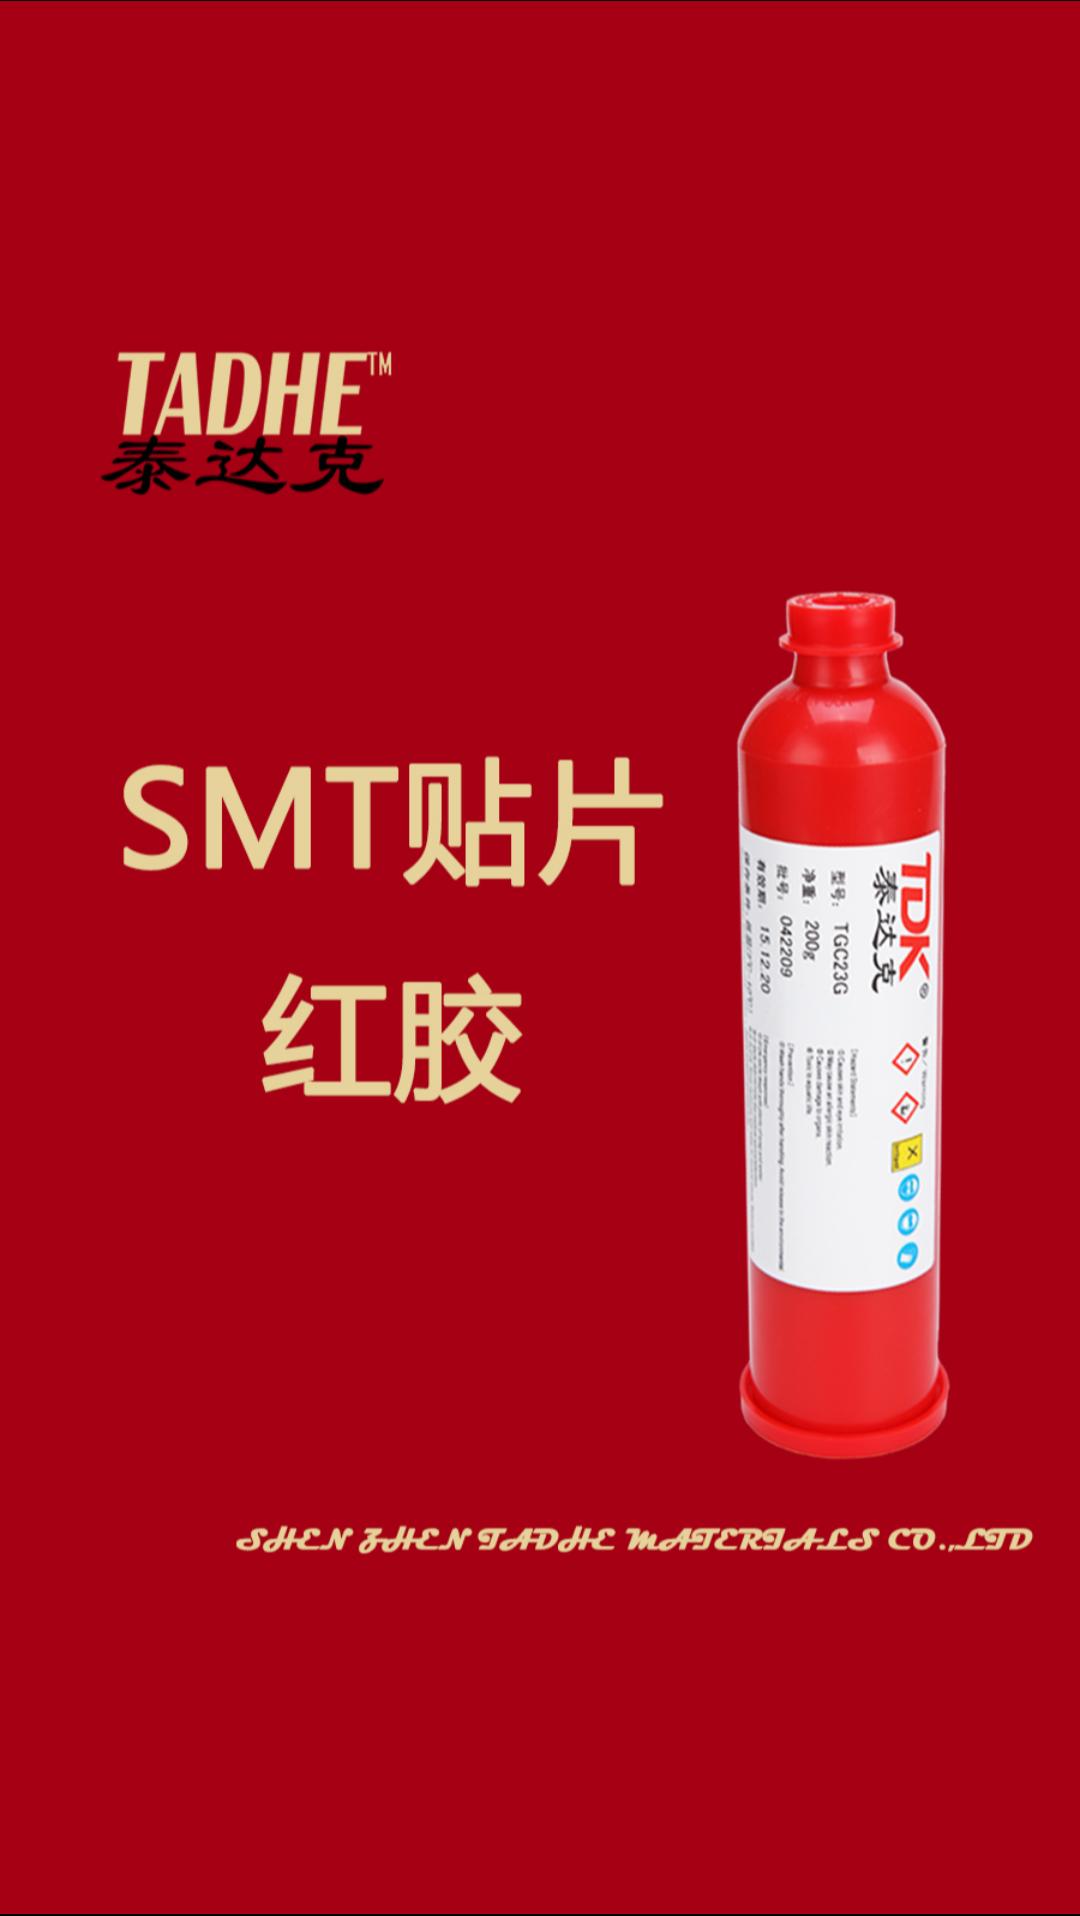 SMT贴片红胶：用于电子元器件粘接在PCB上，玻璃二极管M7件不掉件。#pcb设计 #电子制作 #电子 